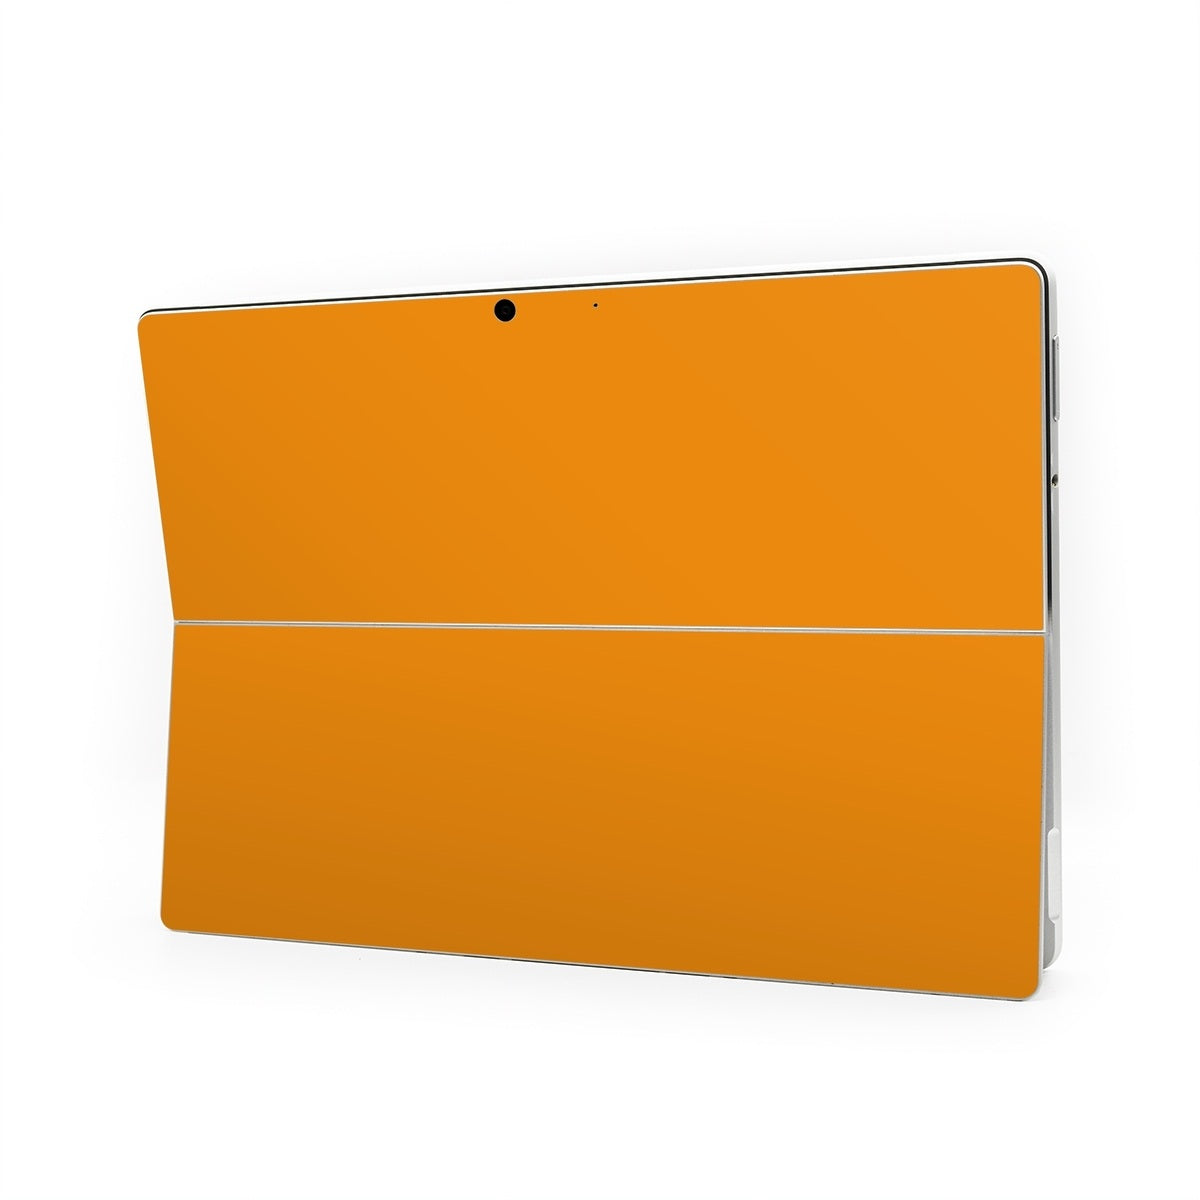 Solid State Orange - Microsoft Surface Pro Skin